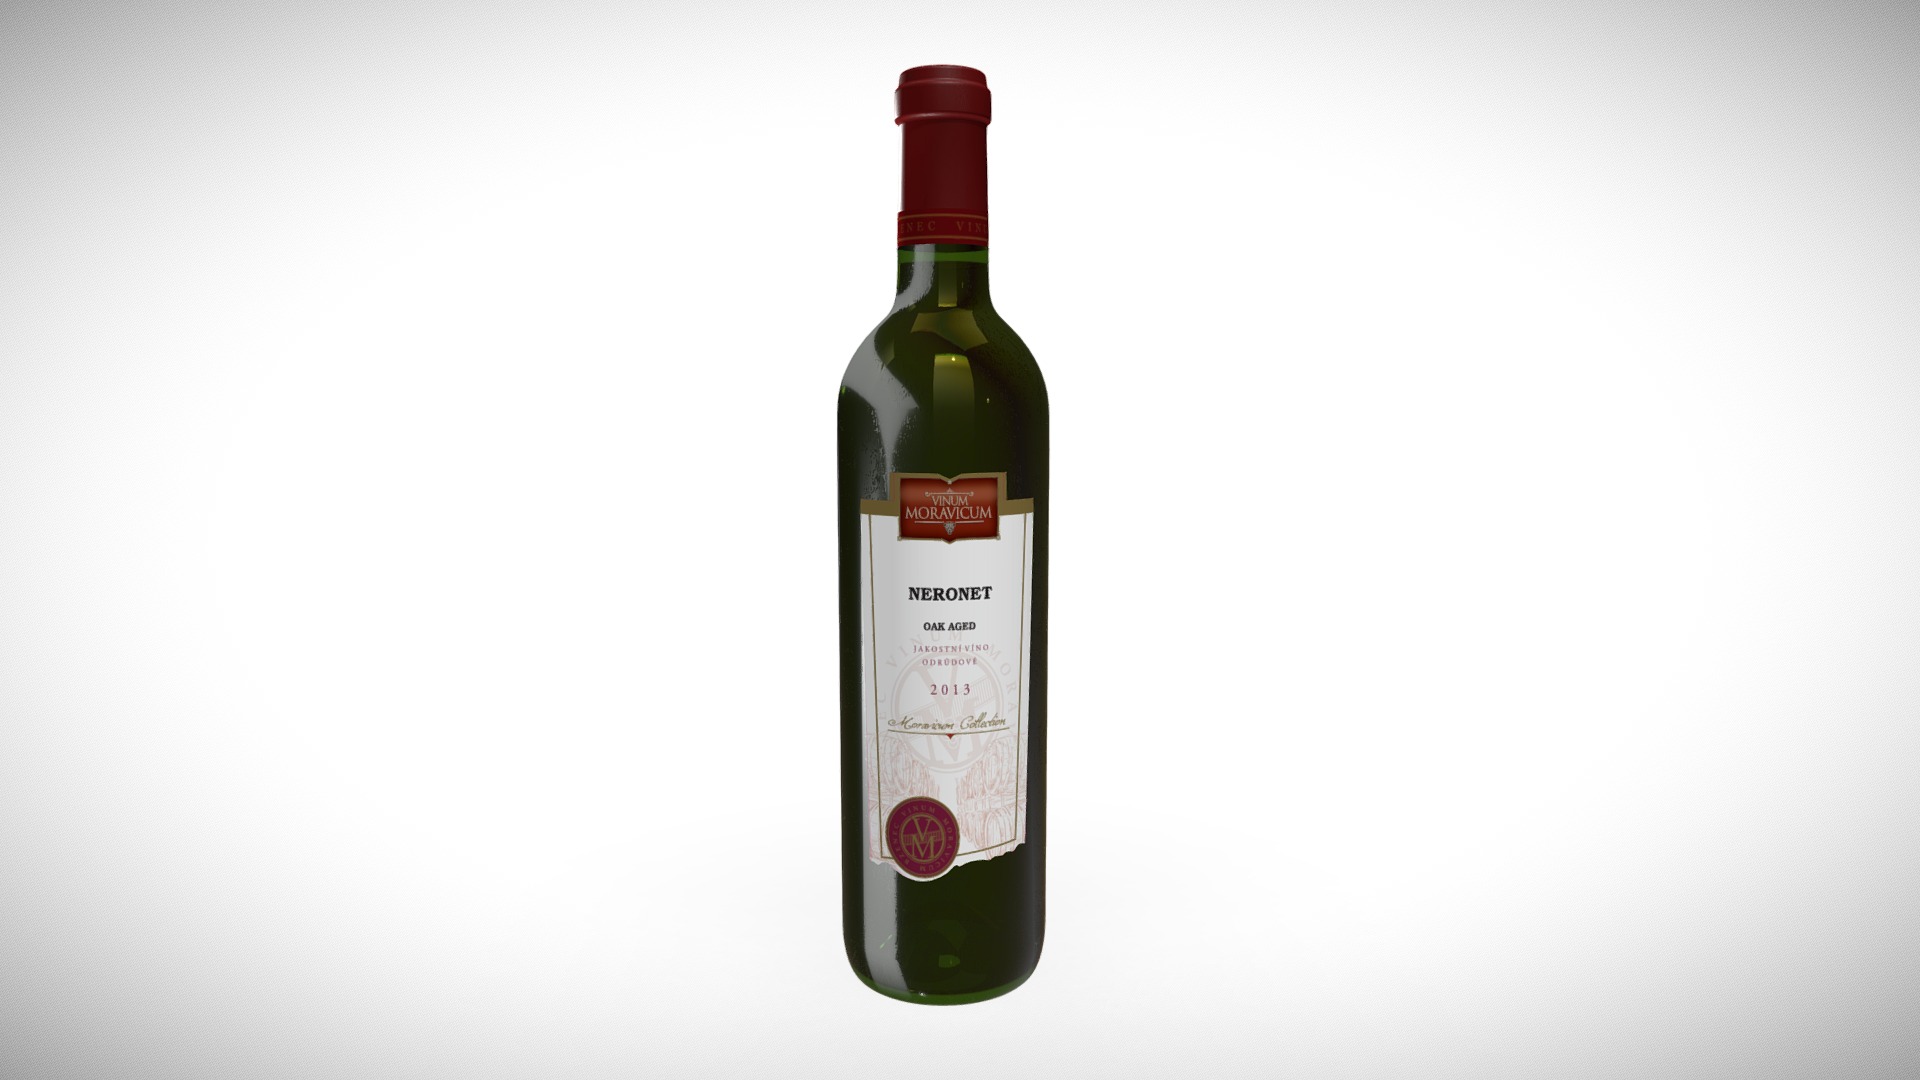 3D model Bottle of Wine Neronet oak aged - This is a 3D model of the Bottle of Wine Neronet oak aged. The 3D model is about a bottle of wine.